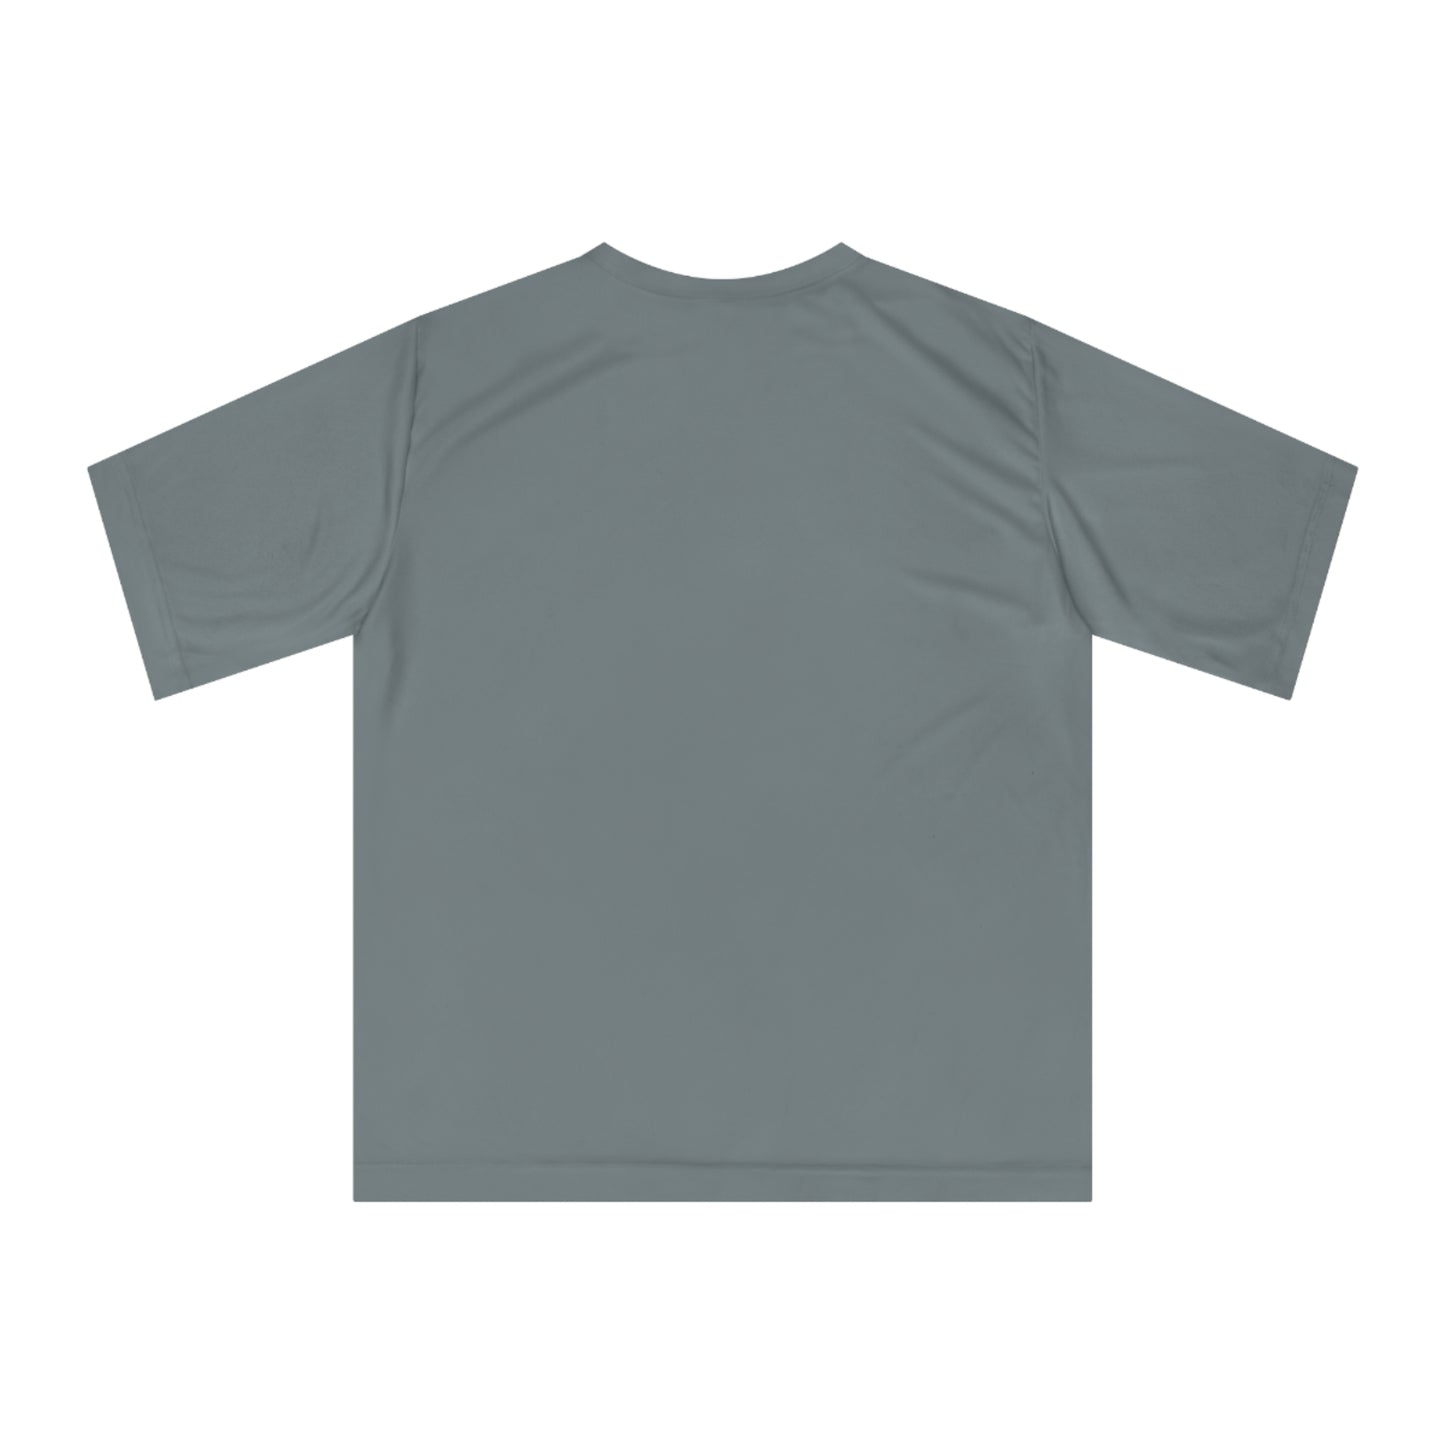 Baseball Rockets - Unisex Zone Performance T-shirt